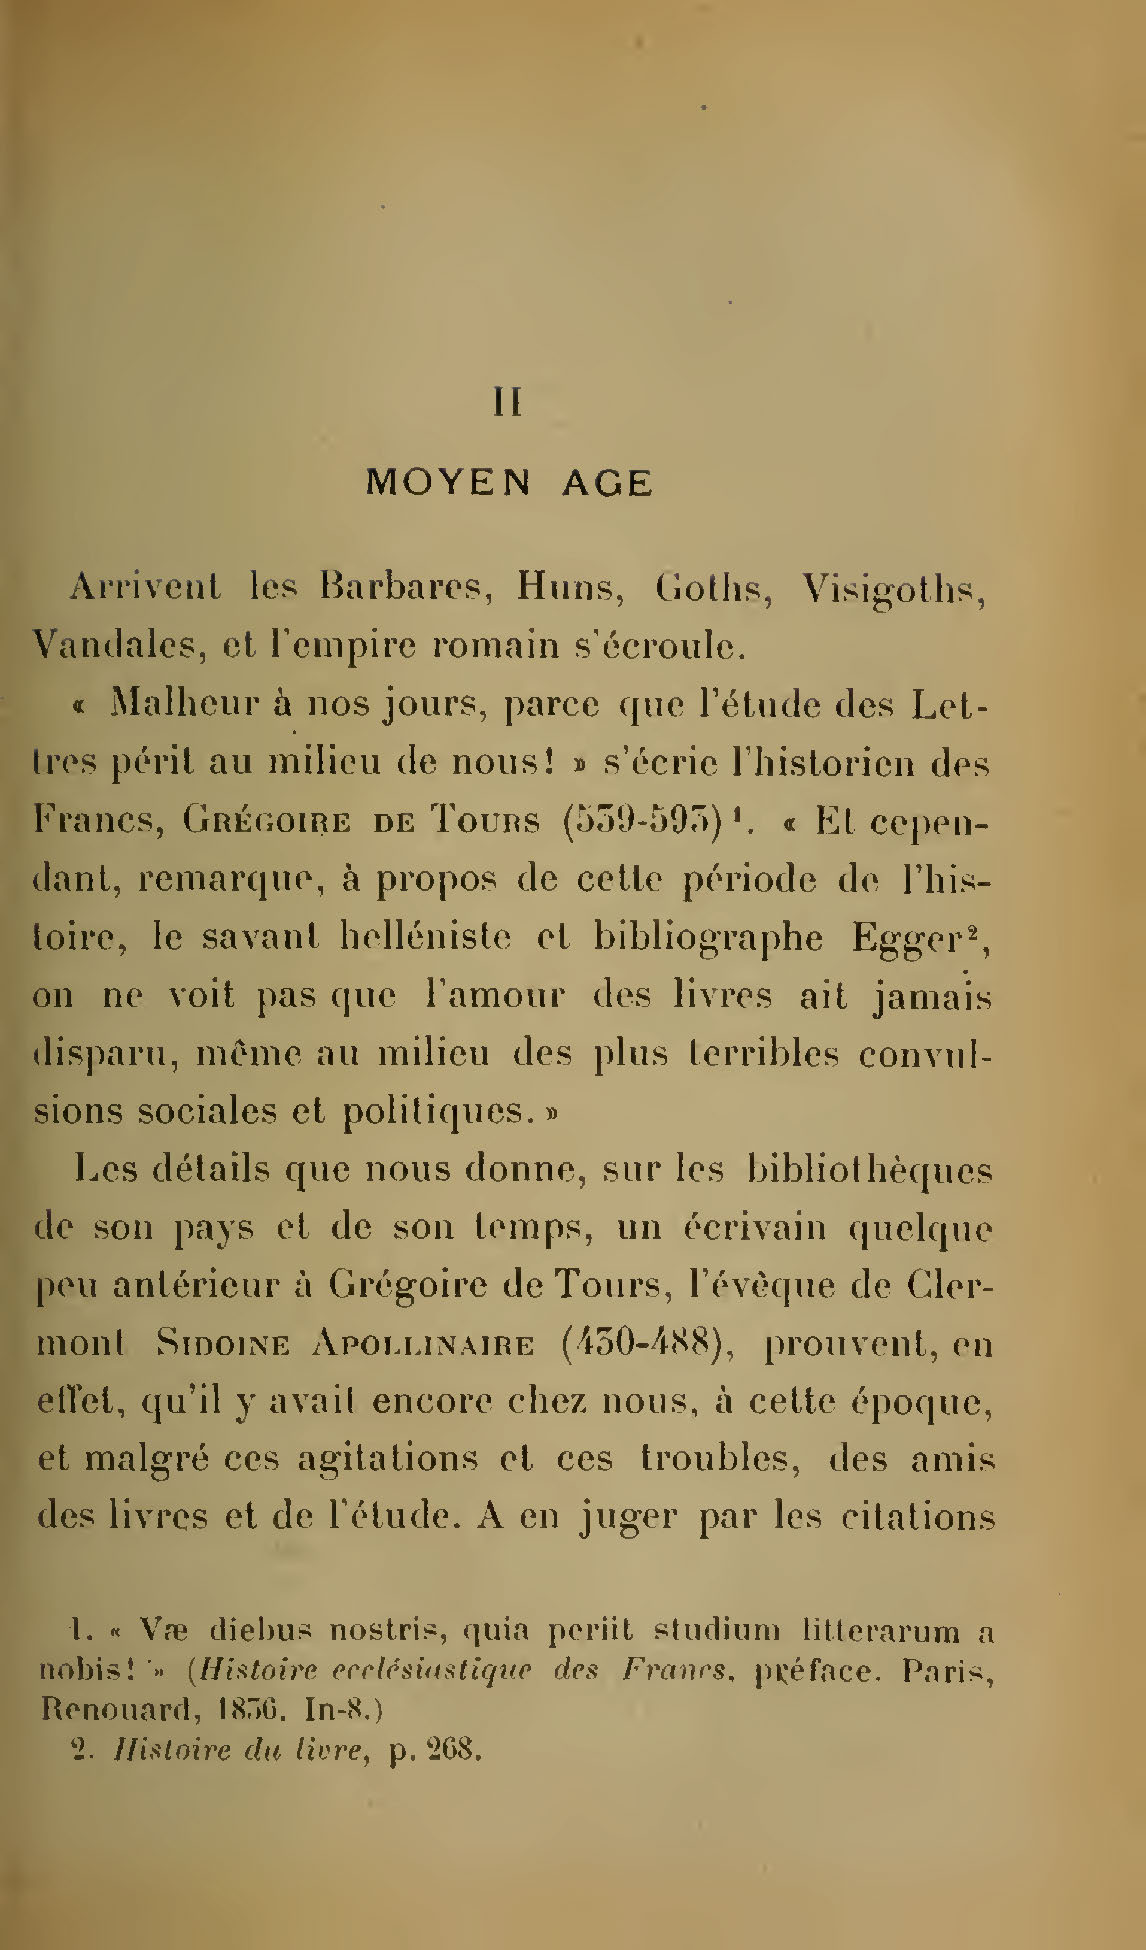 Albert Cim, Le Livre, t. I, p. 77.